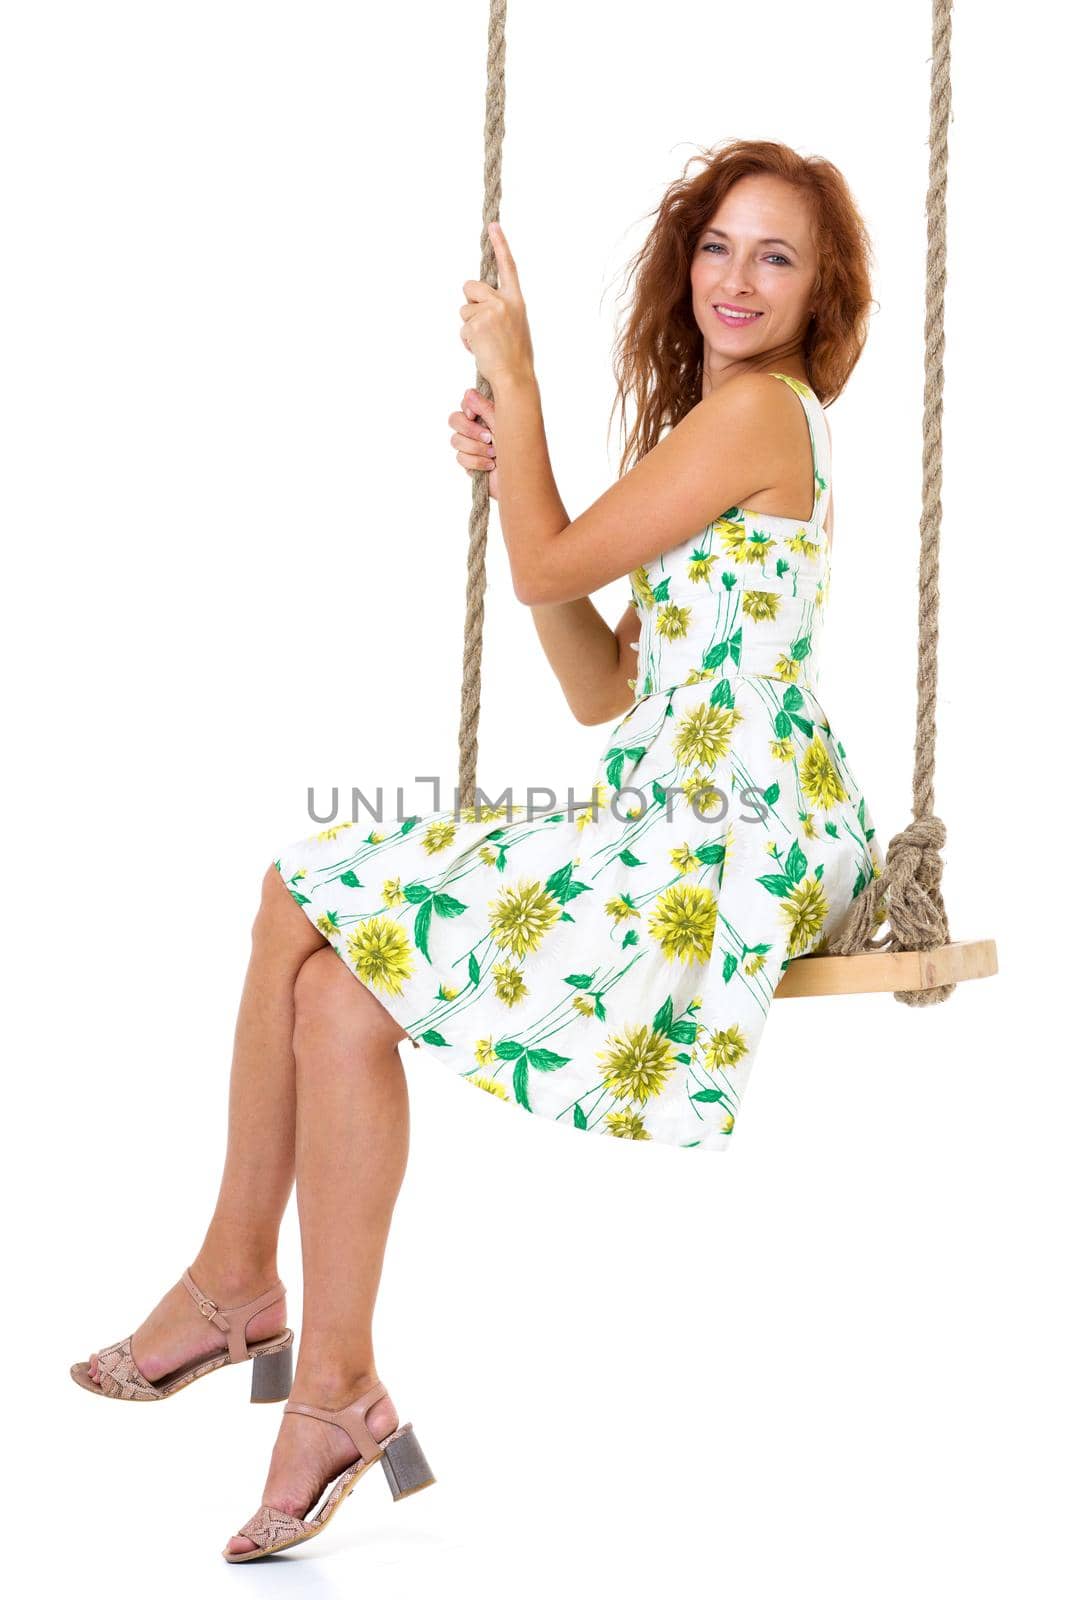 Beautiful young woman swinging on rope swing by kolesnikov_studio